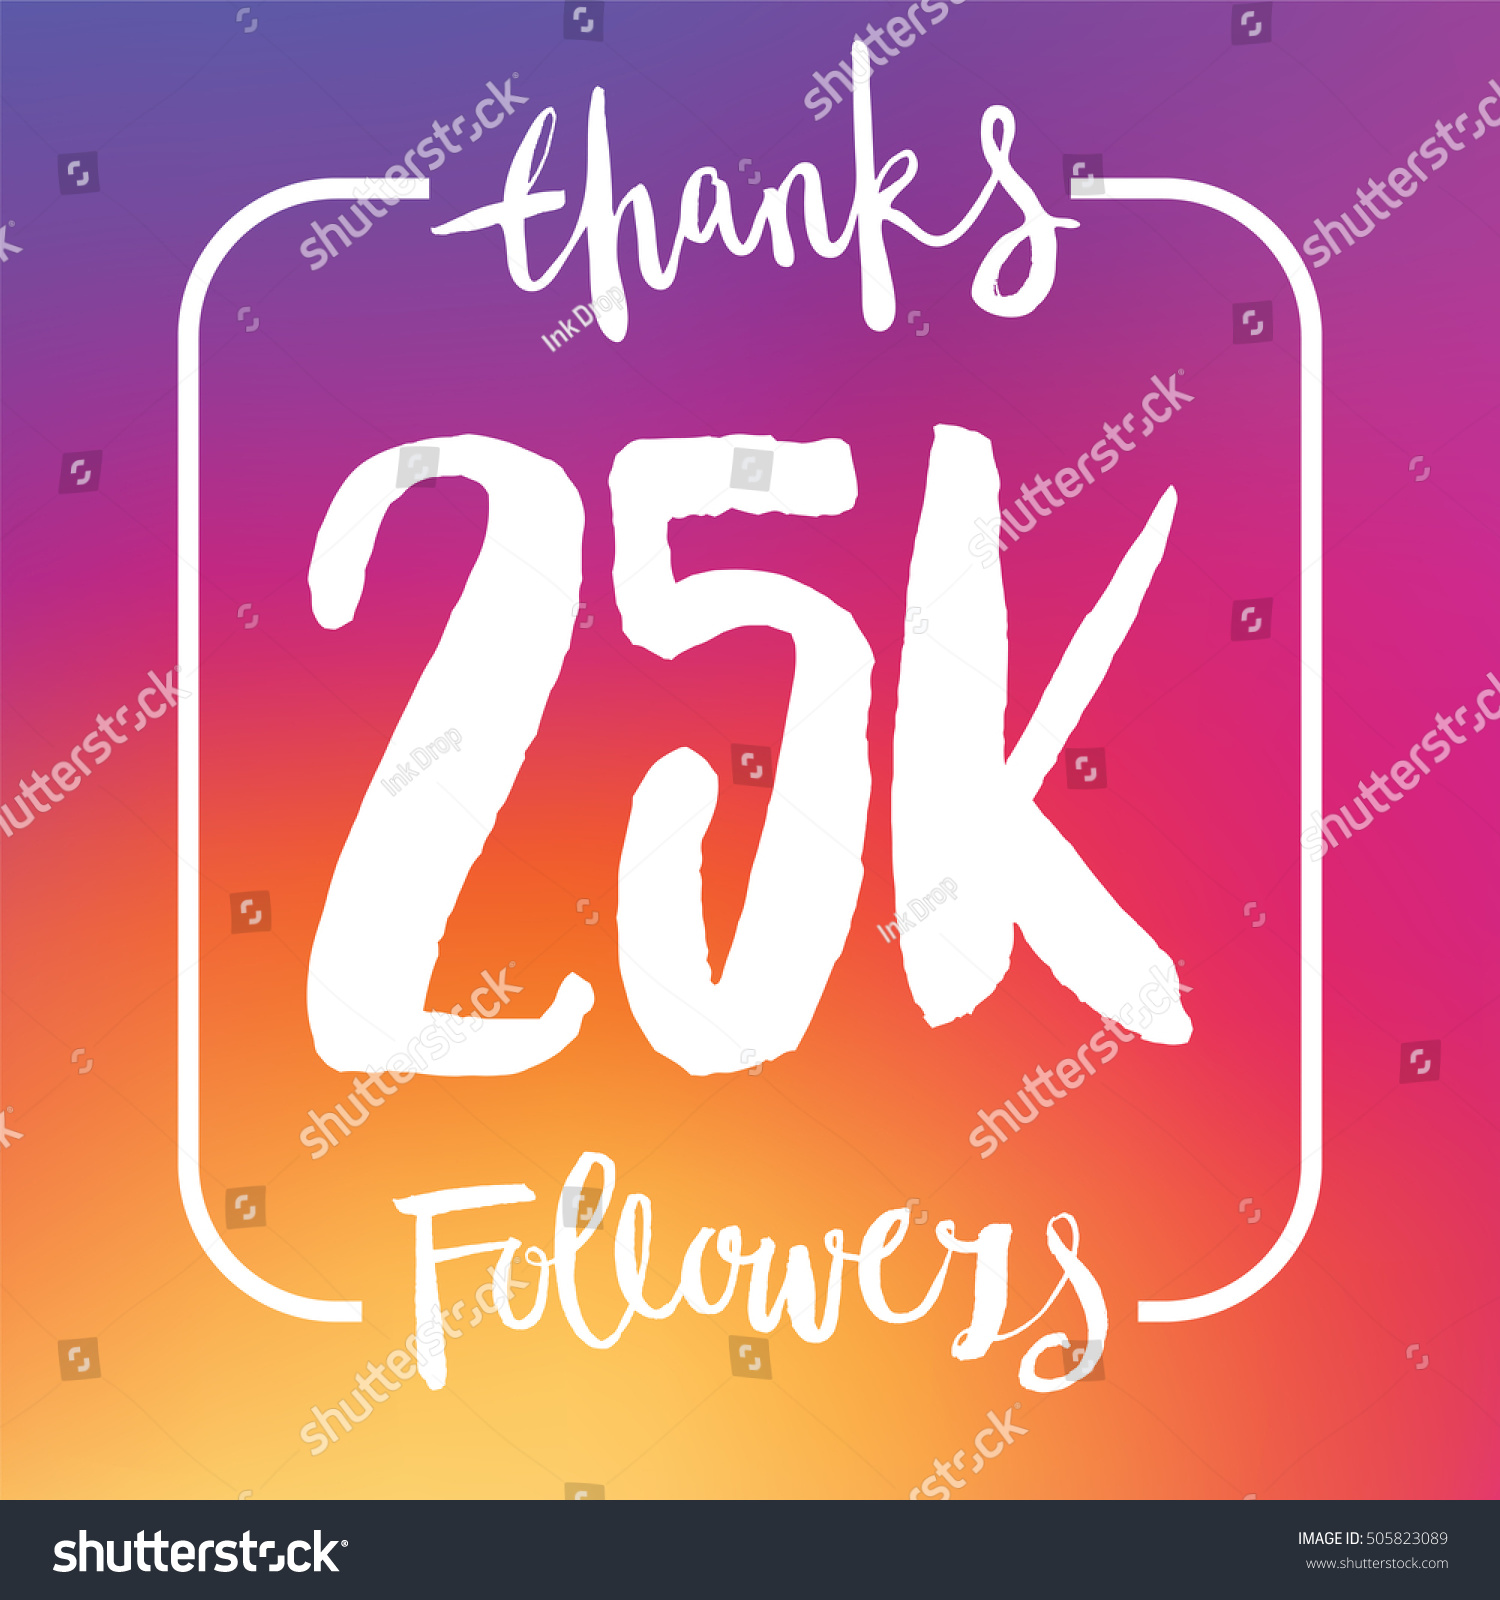 SVG of 25 Thousand followers online social media achievement svg